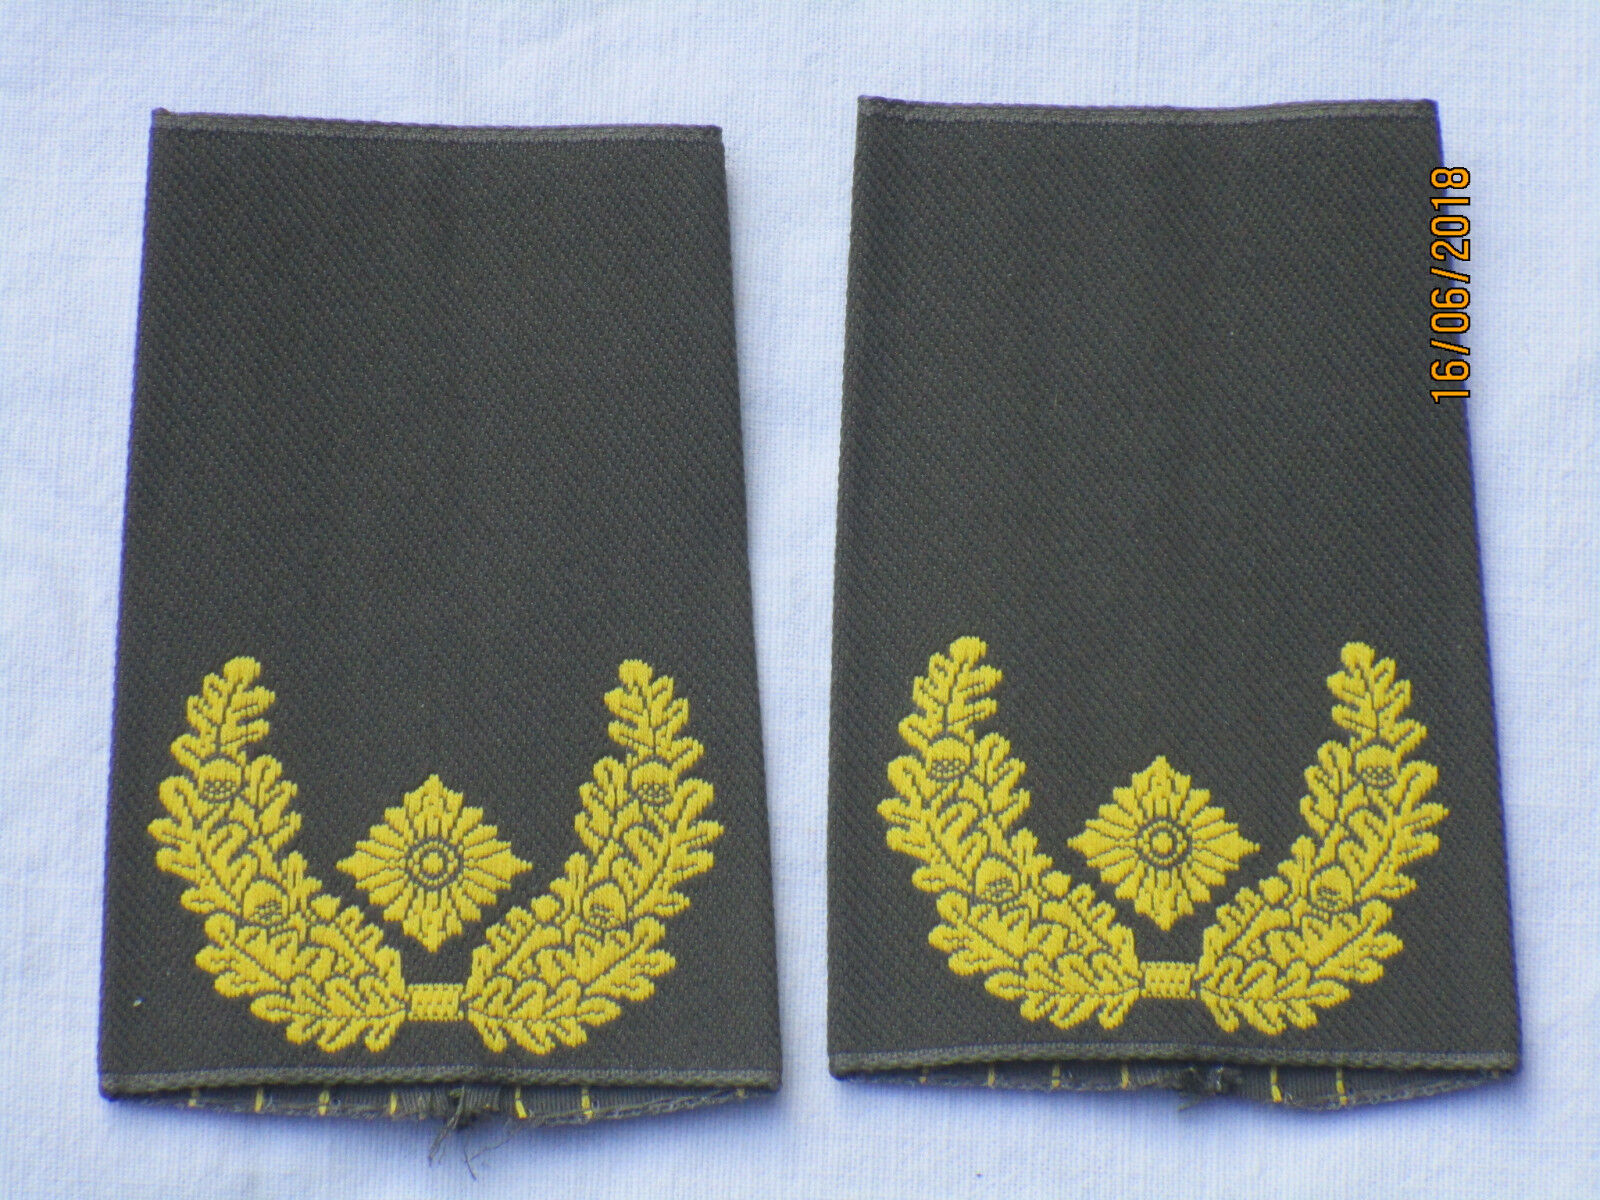 Bw Rank: - Brigadier, Army, Gold/ Olive